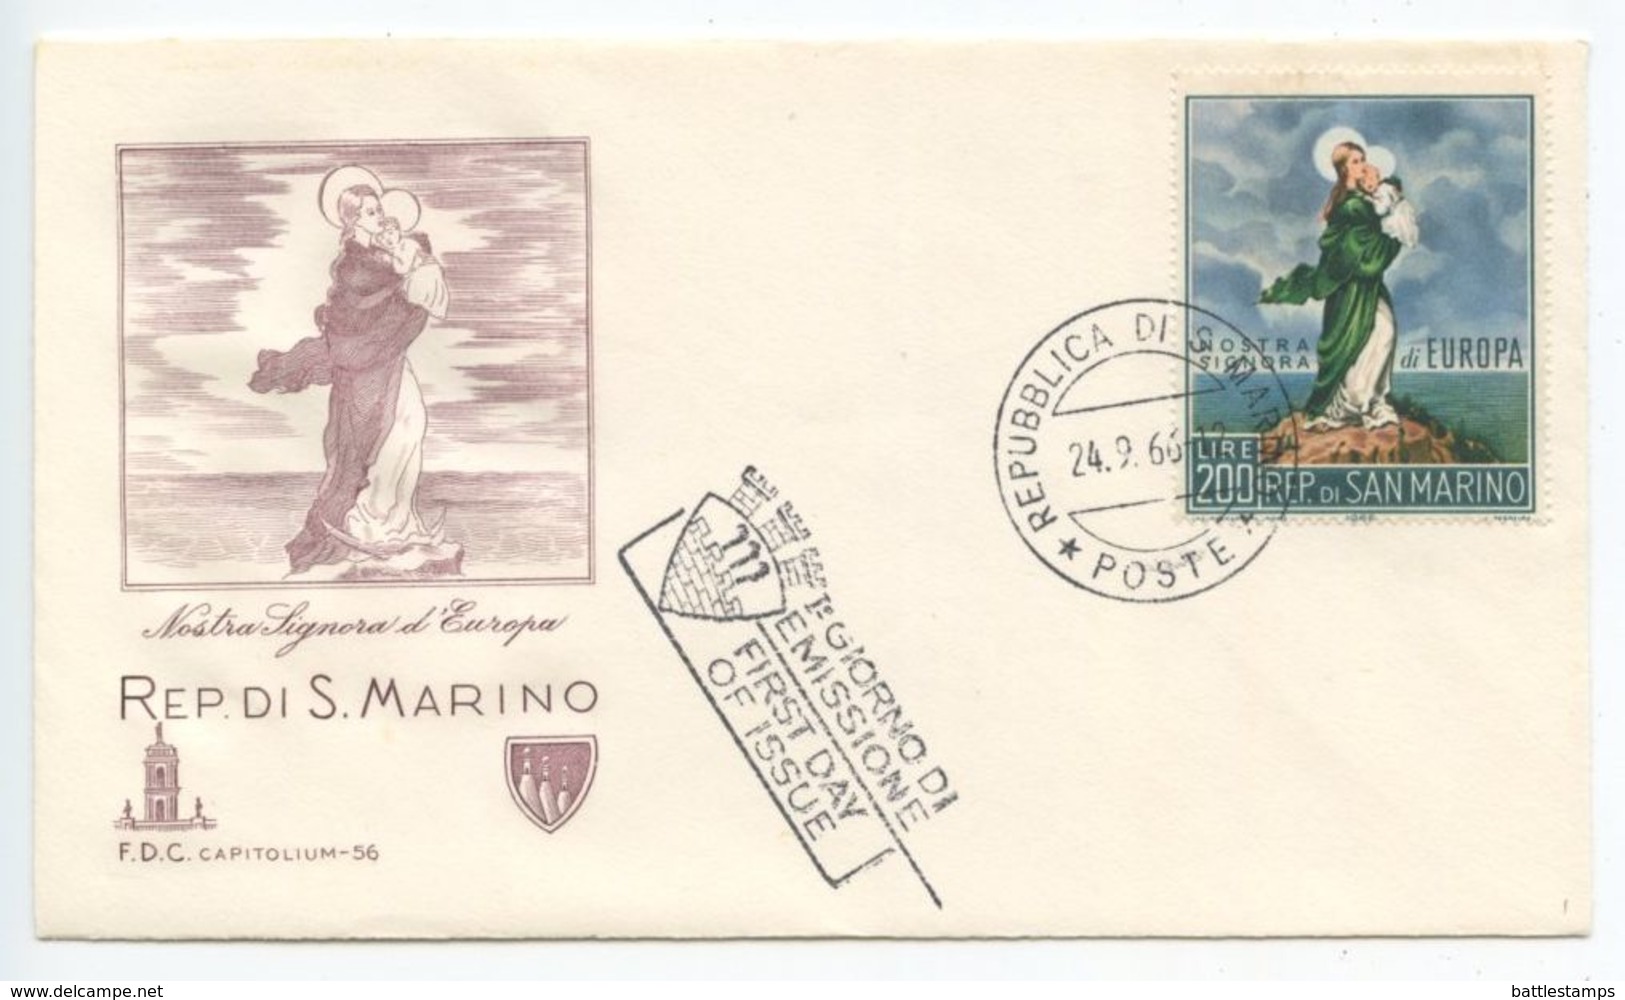 San Marino 1966 FDC Scott 653 Europa - Our Lady Of Europe - FDC